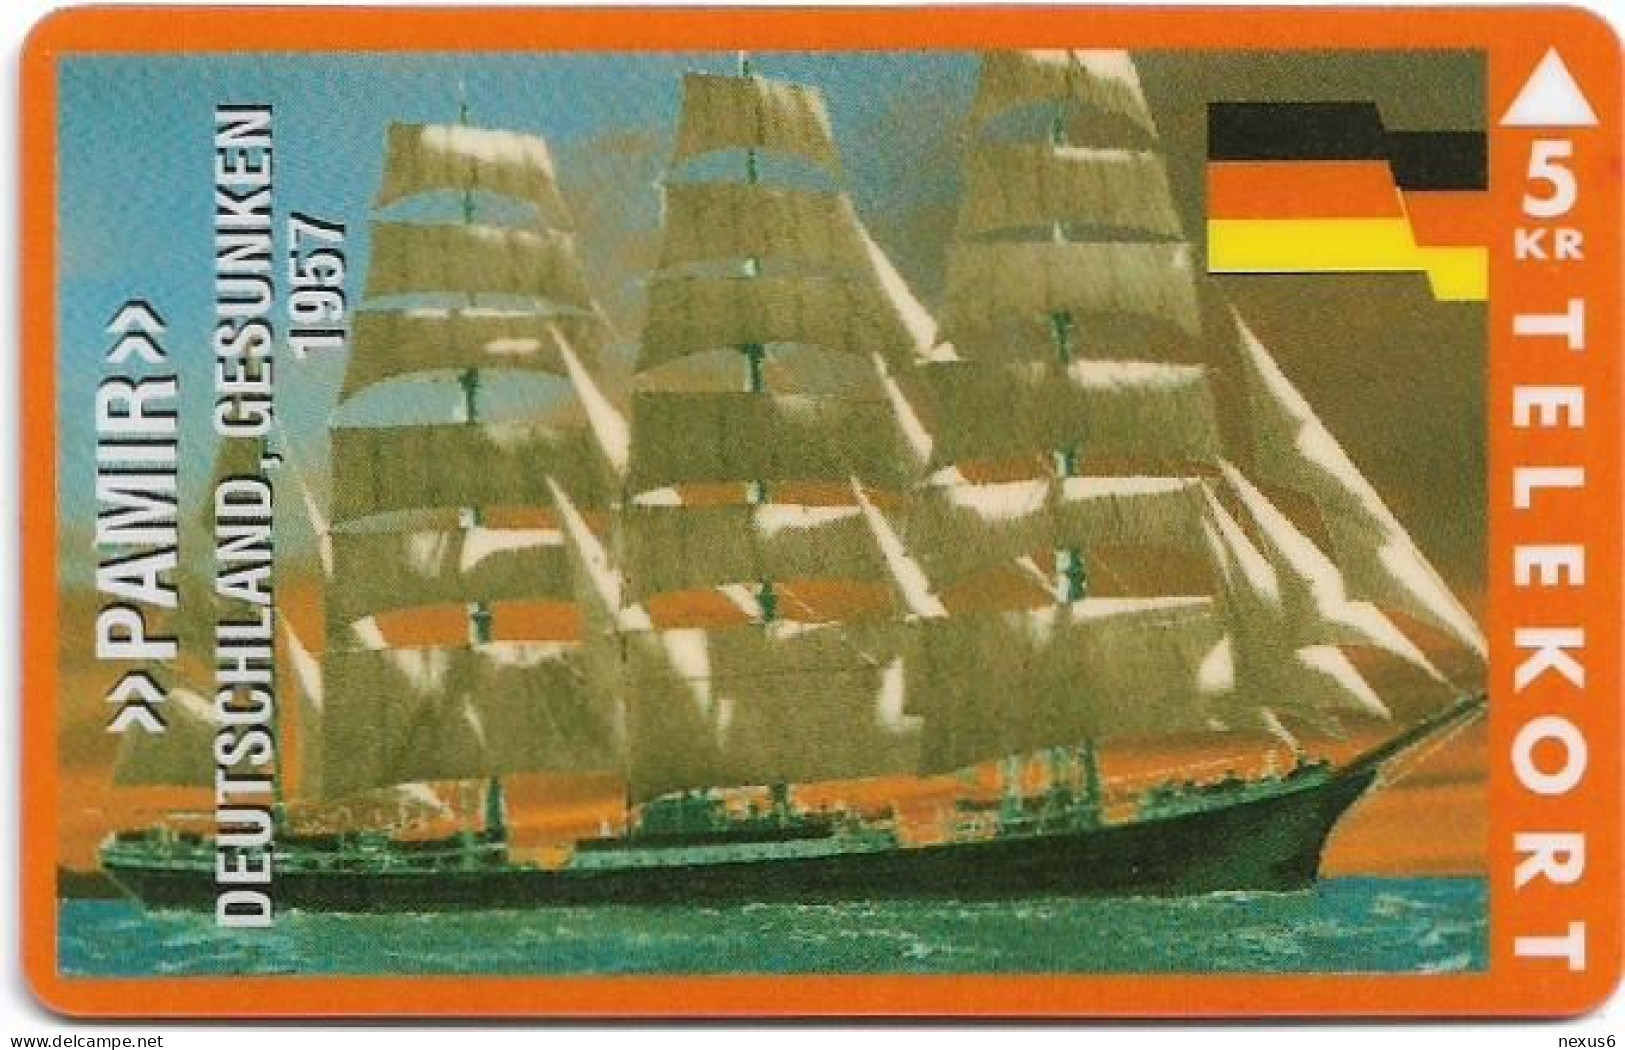 Denmark - KTAS - Ships (Red) - Germany - Pamir - TDKP136 - 03.1995, 5kr, 1.500ex, Used - Danemark